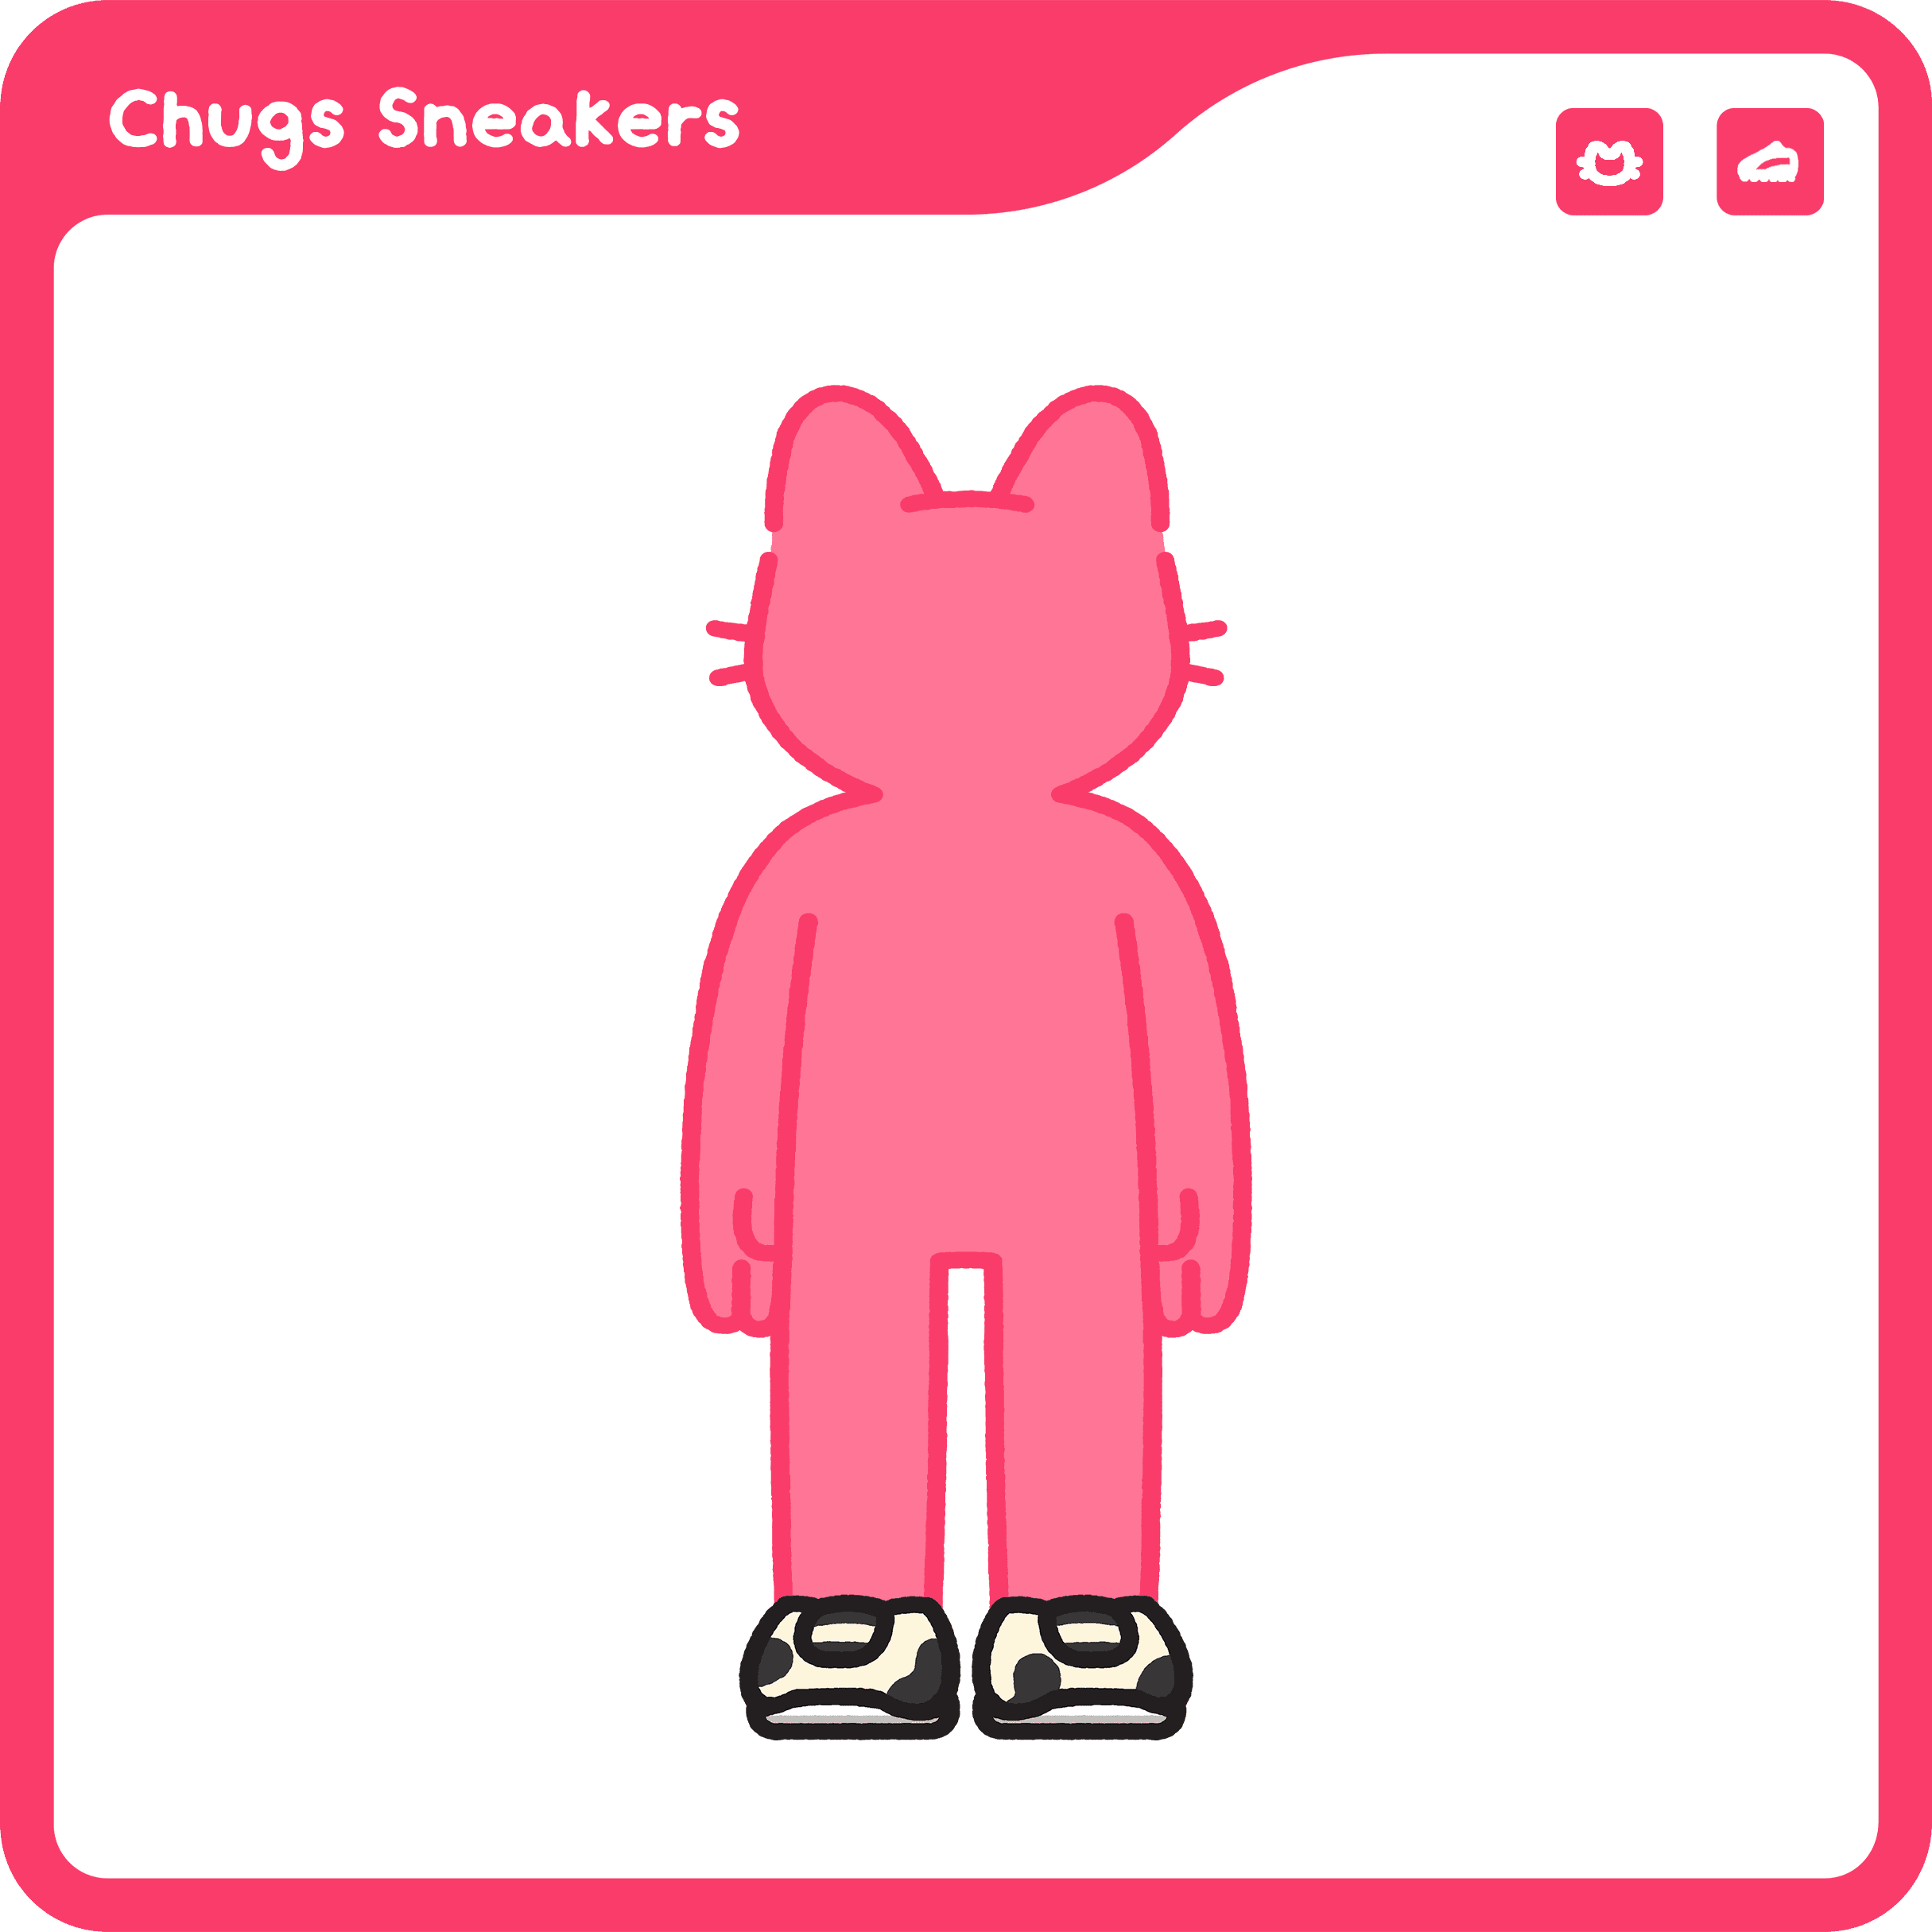 Chugs Sneakers